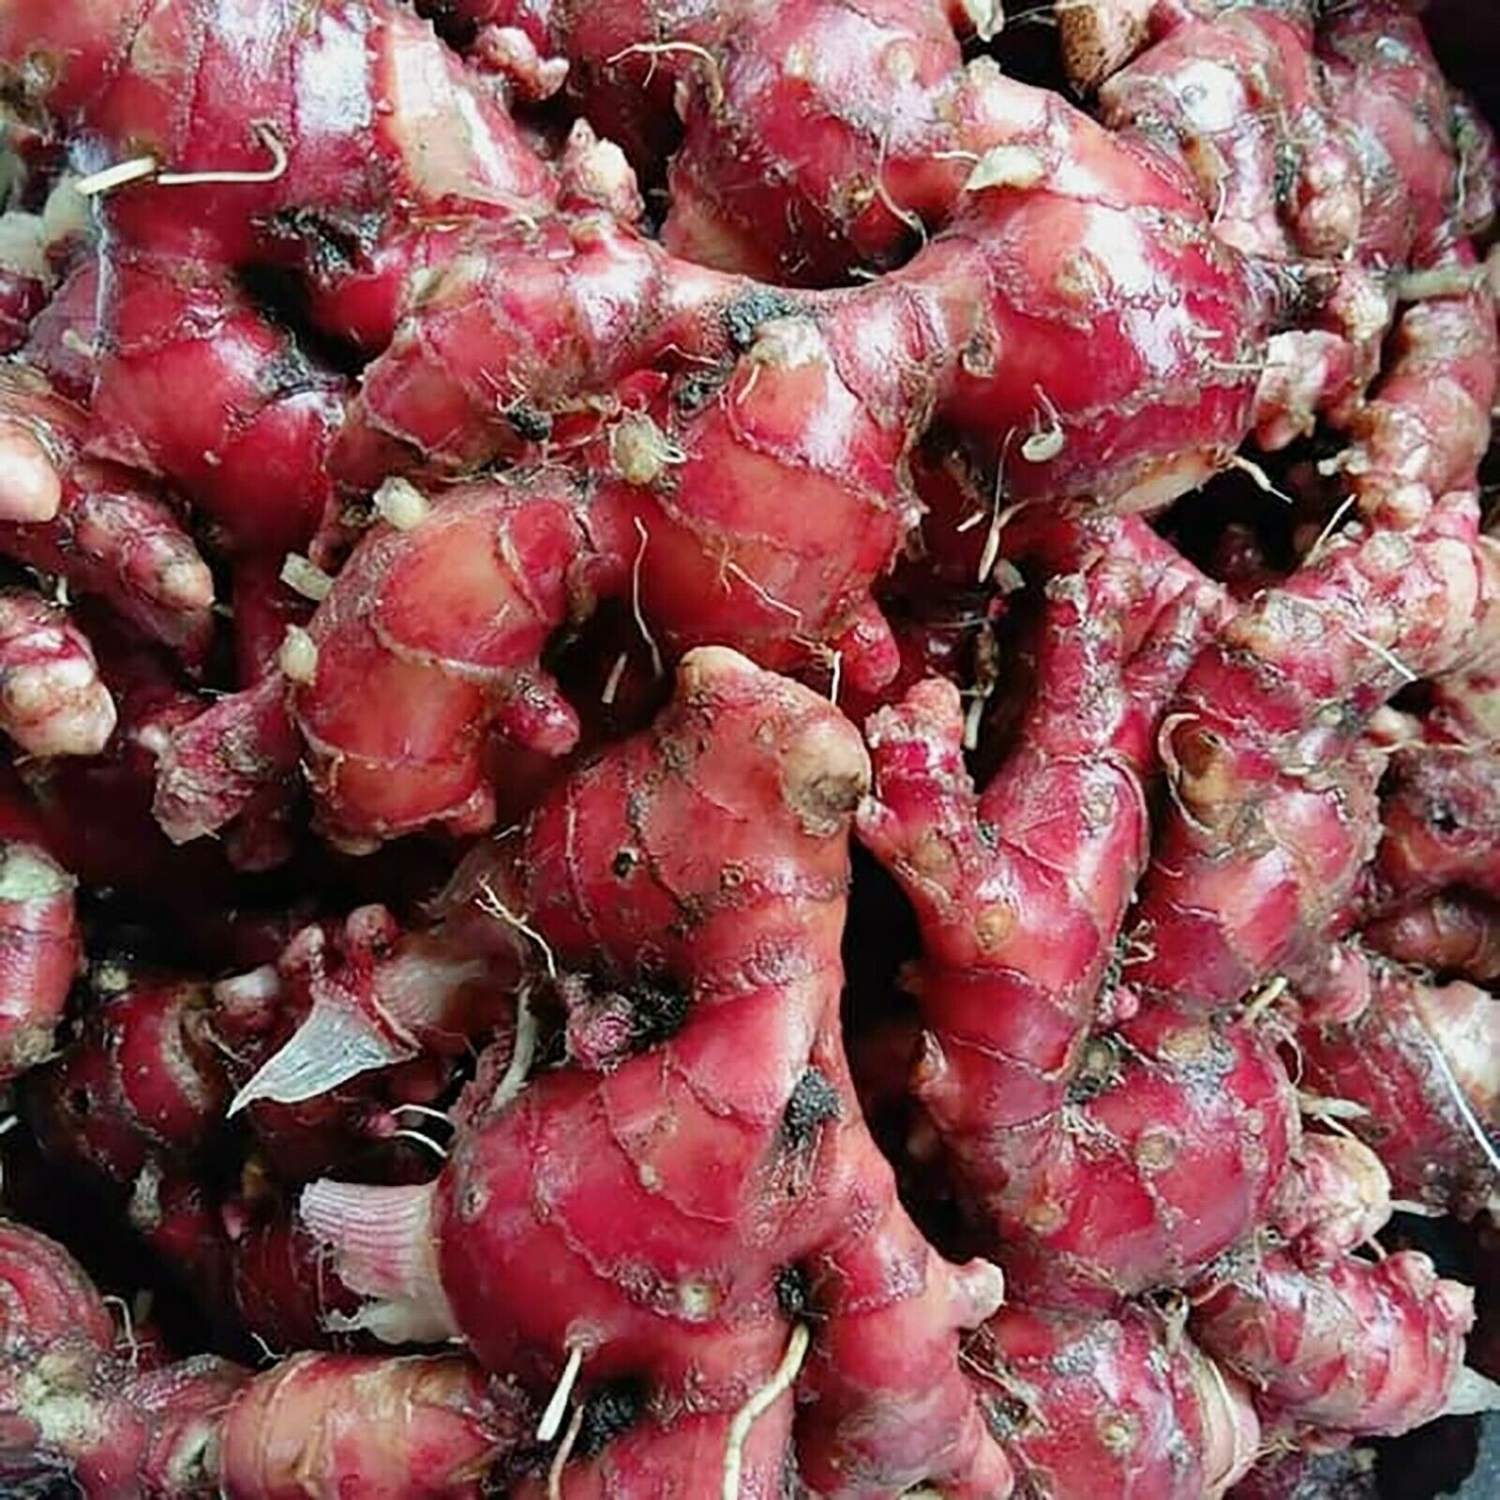 Red Ginger Rhizome / Chuvanna Inchi (Alpinia purpurata)